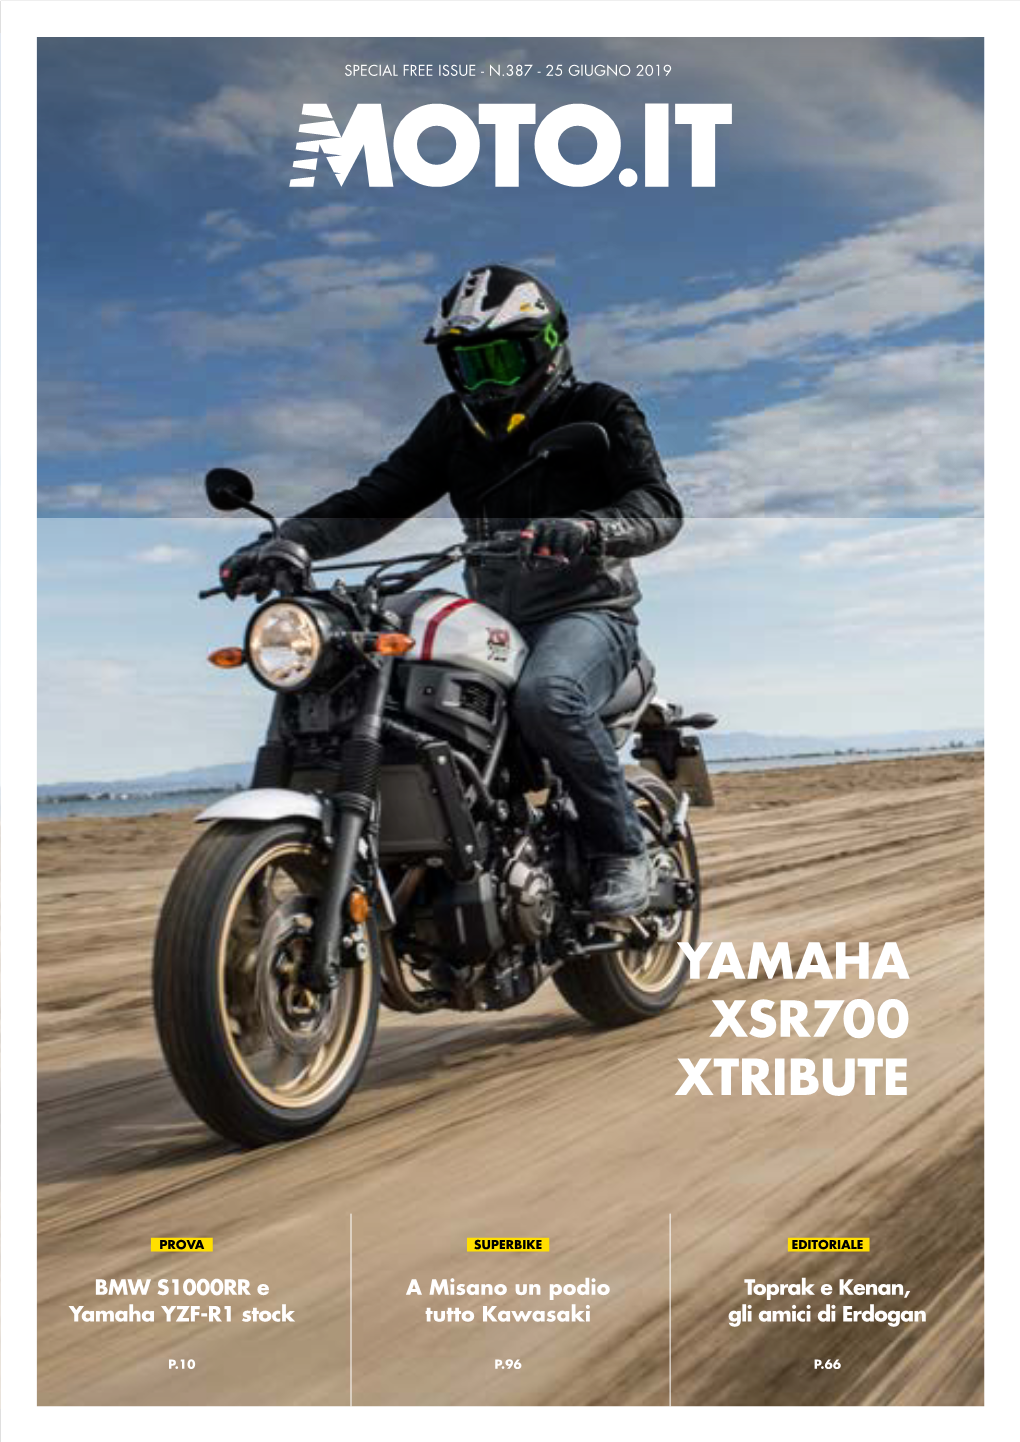 Yamaha Xsr700 Xtribute